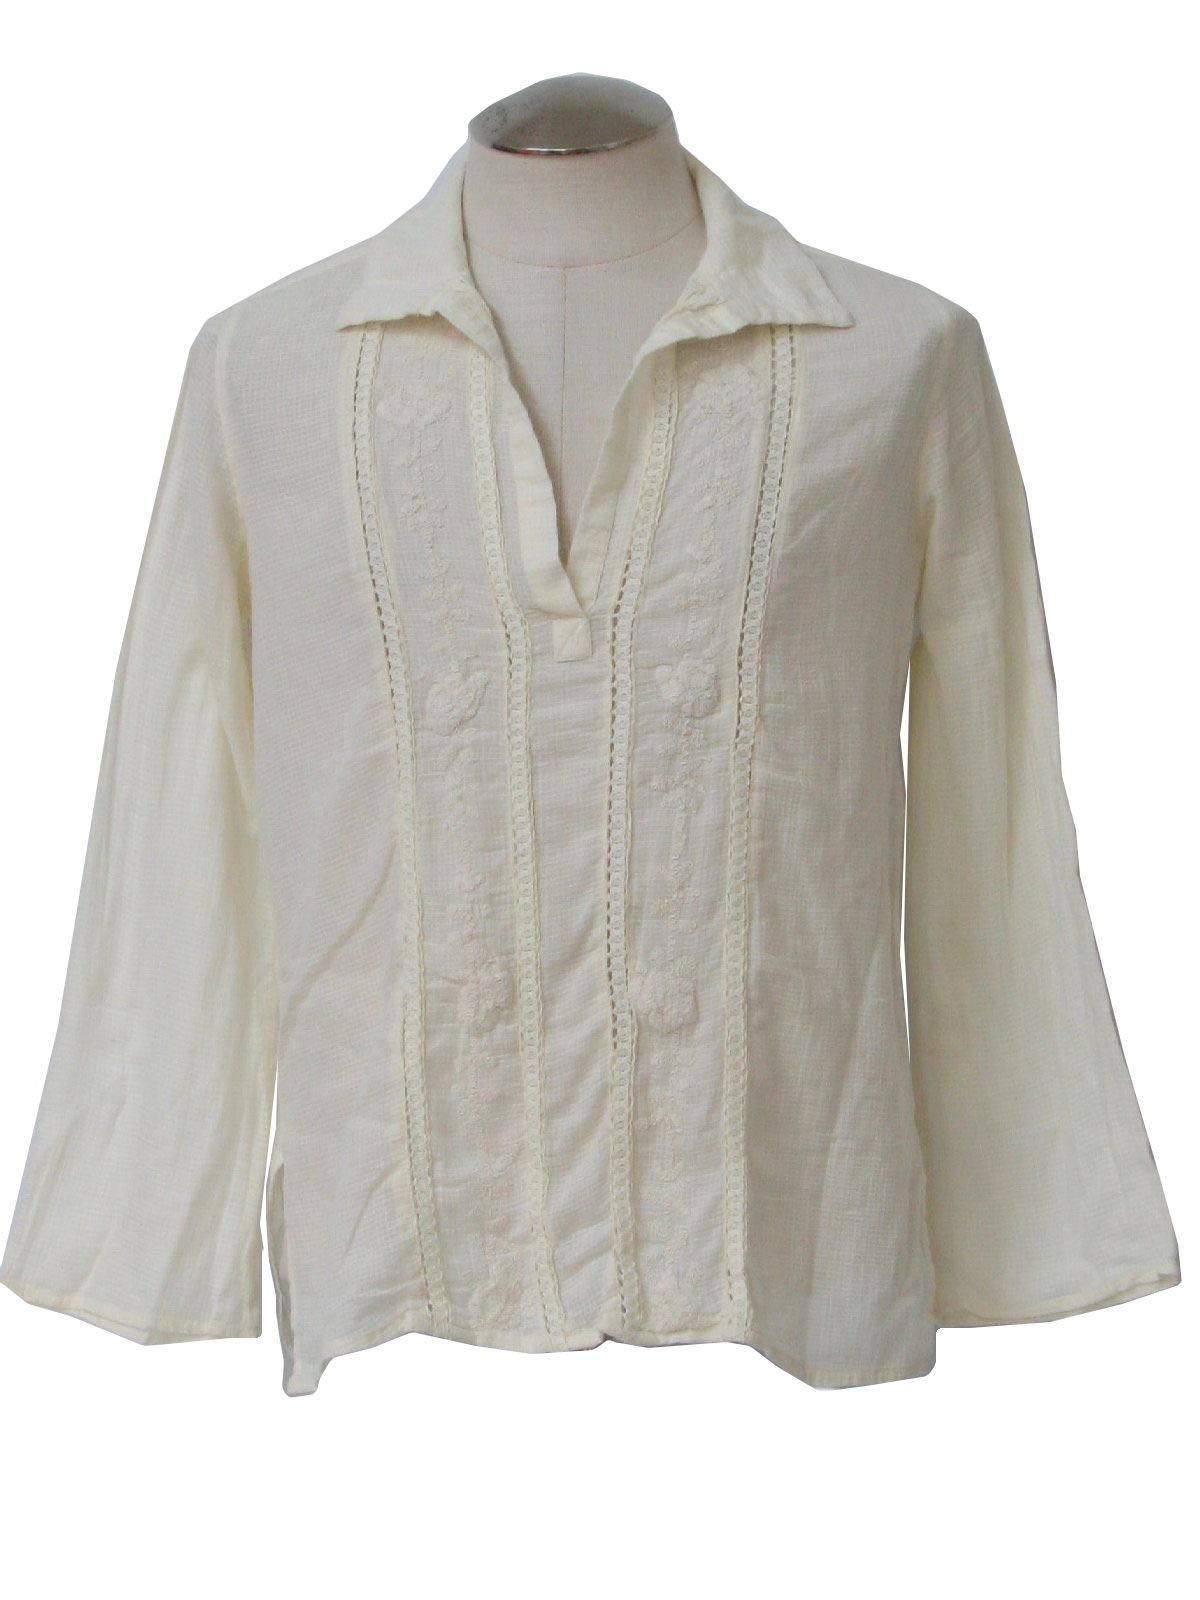 Eighties Hippie Shirt: 80s -no label- Unisex cream semi-sheer cotton ...